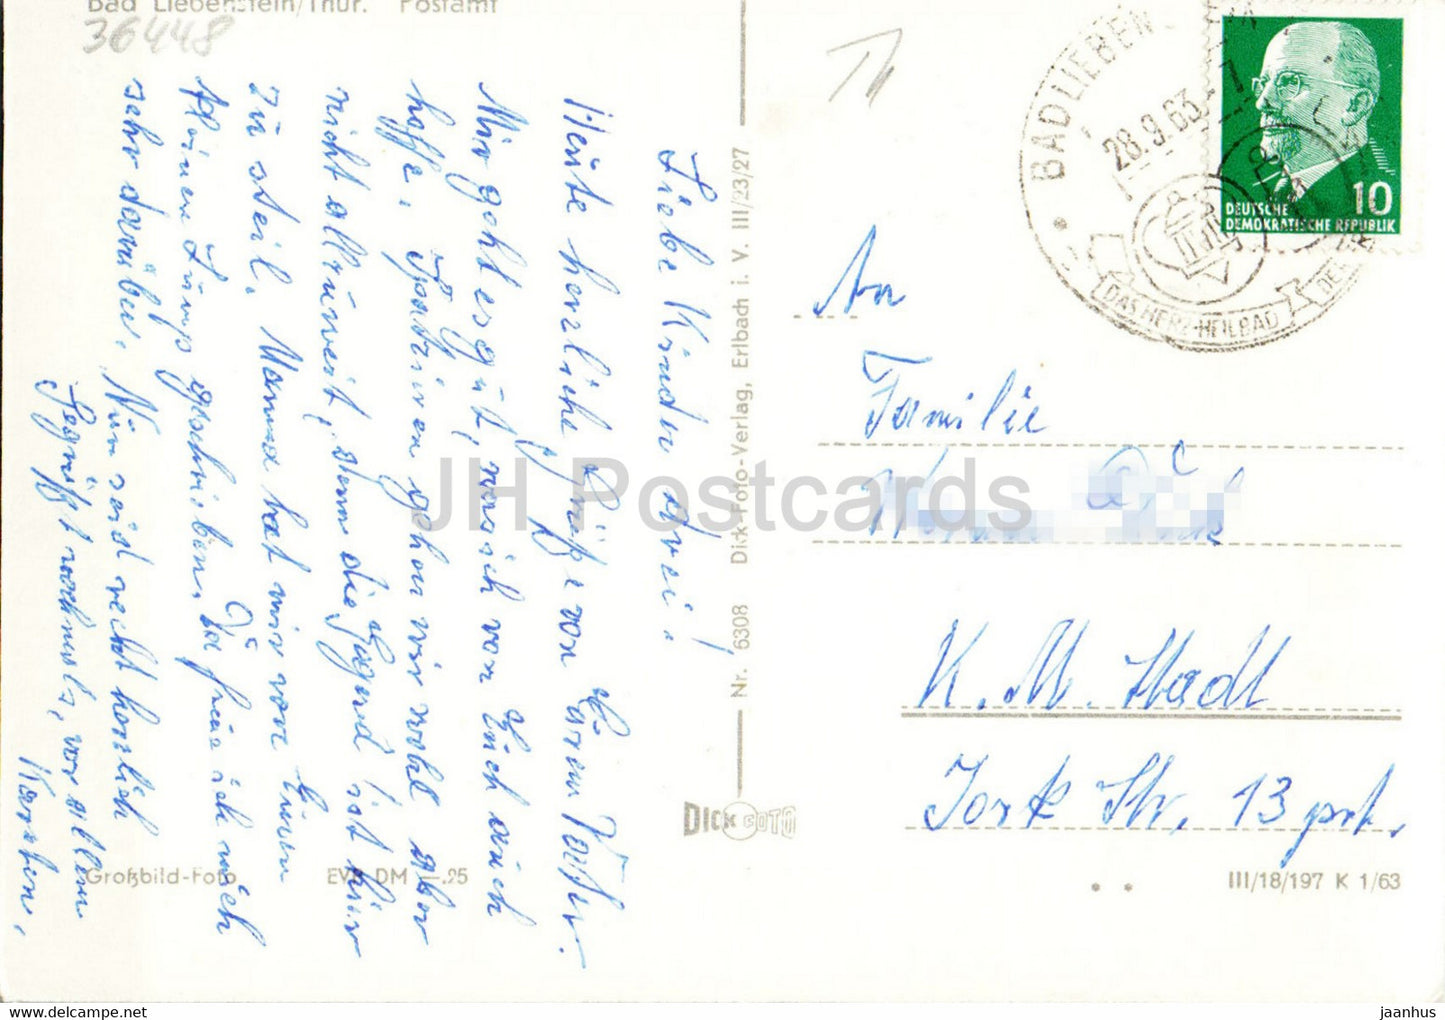 Bad Liebenstein - Postamt - post office - car - old postcard - 1963 - Germany DDR - used